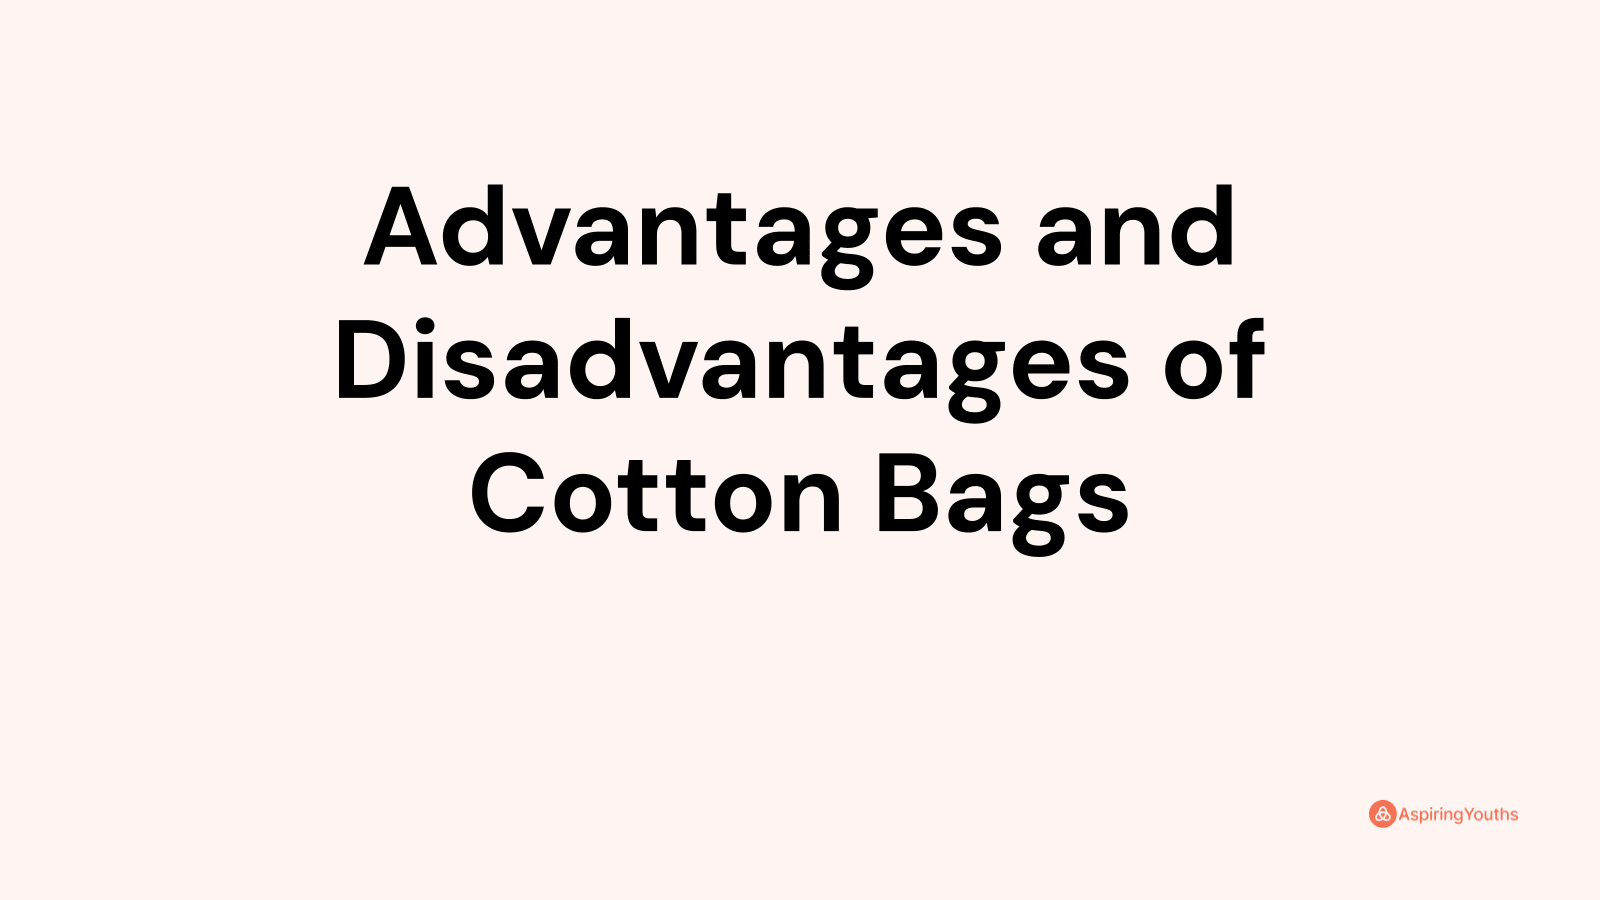 Advantages and disadvantages of Cotton Bags